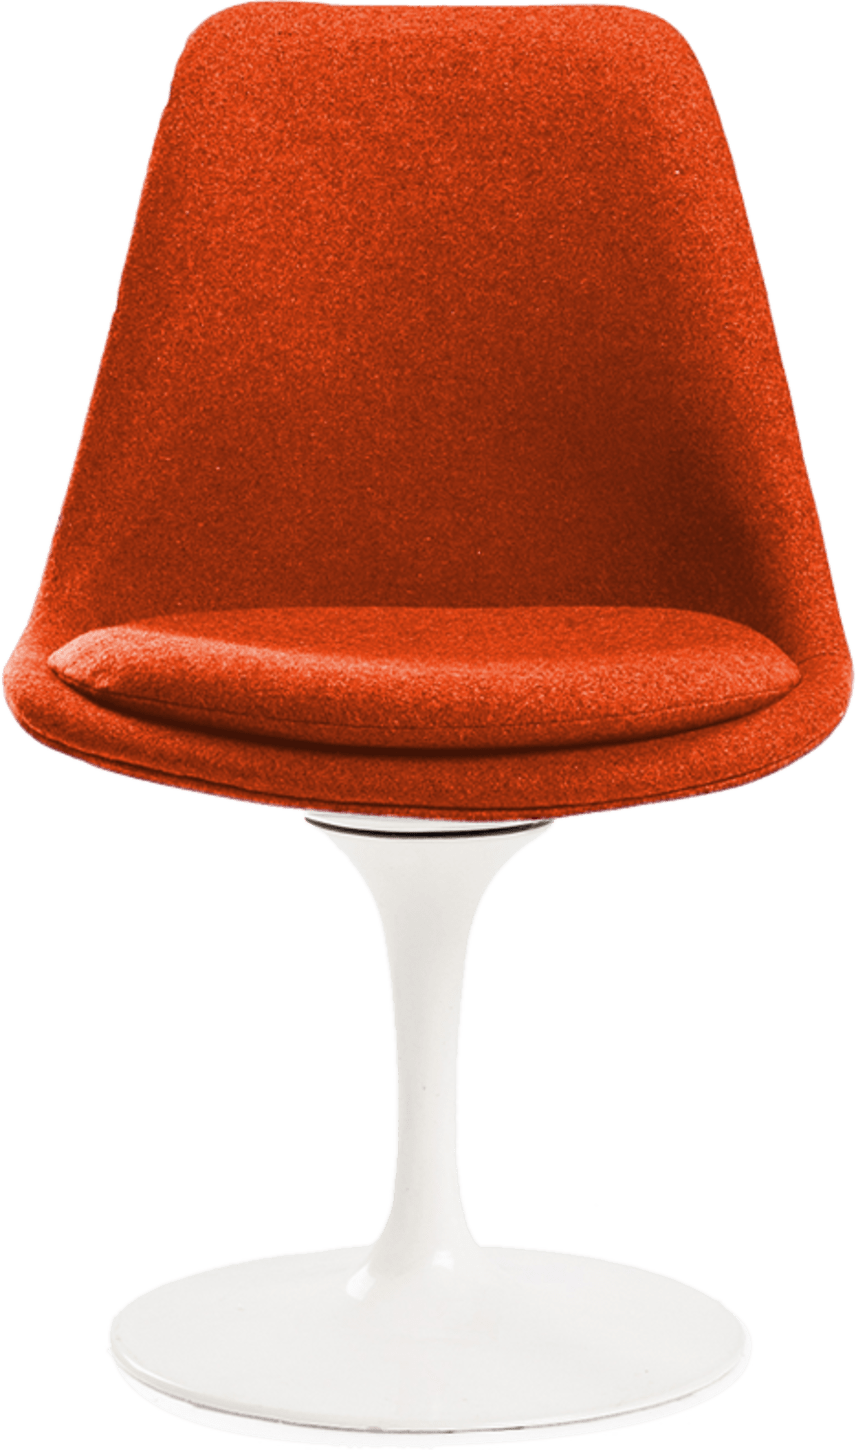 Tulip Chair Upholstered Orange image.